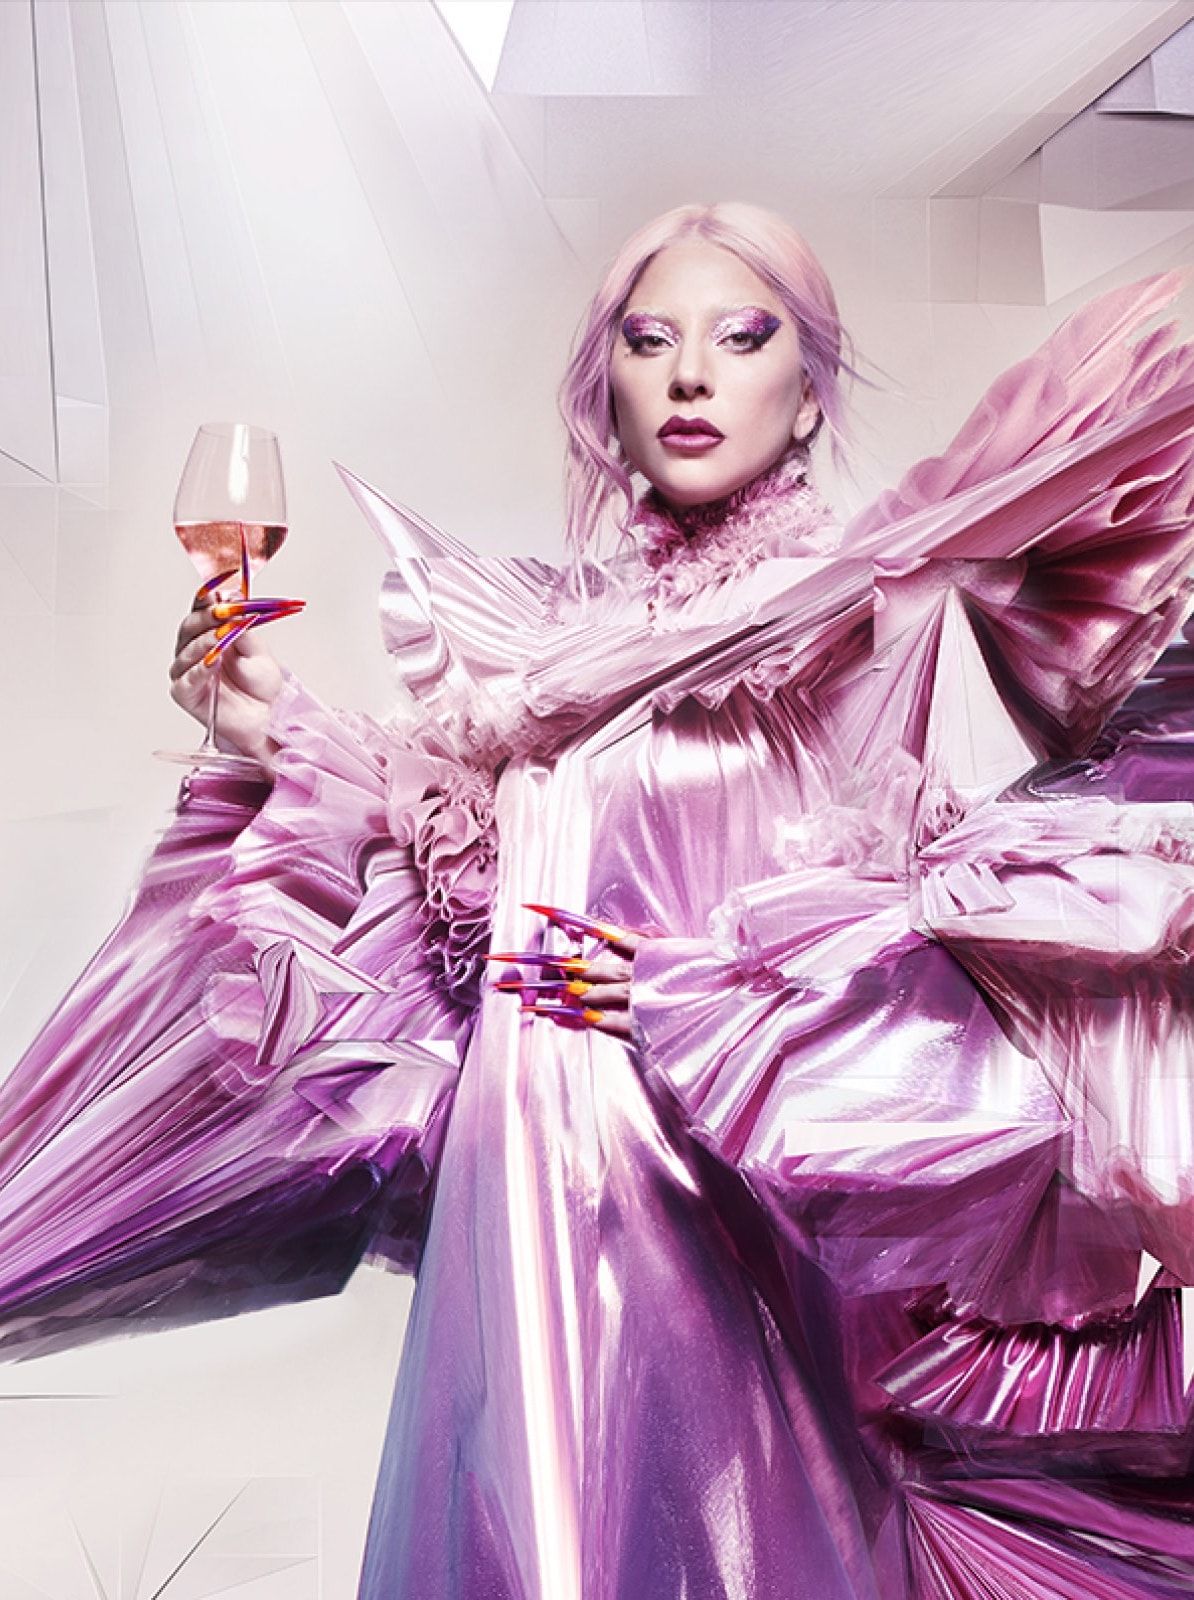 Lady Gaga posing with a glass of Dom Pérignon